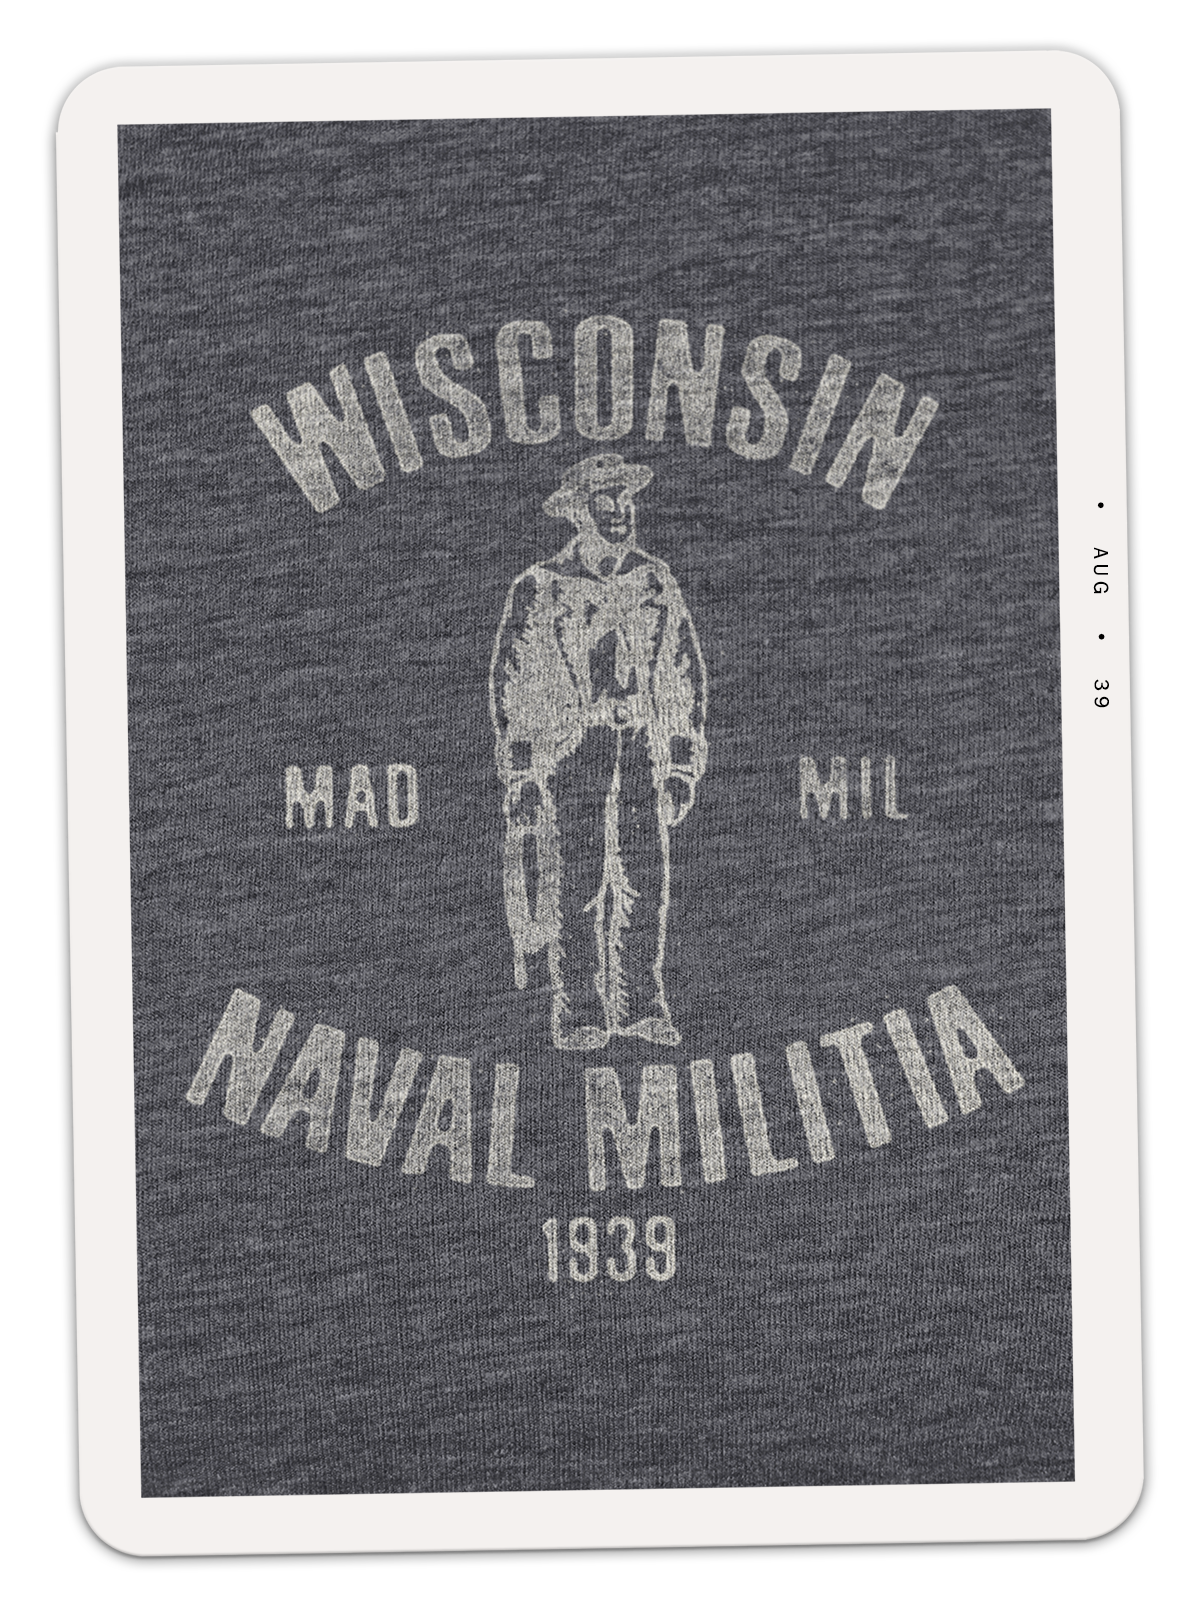 Wisconsin Naval Militia 1939 Adult Tee